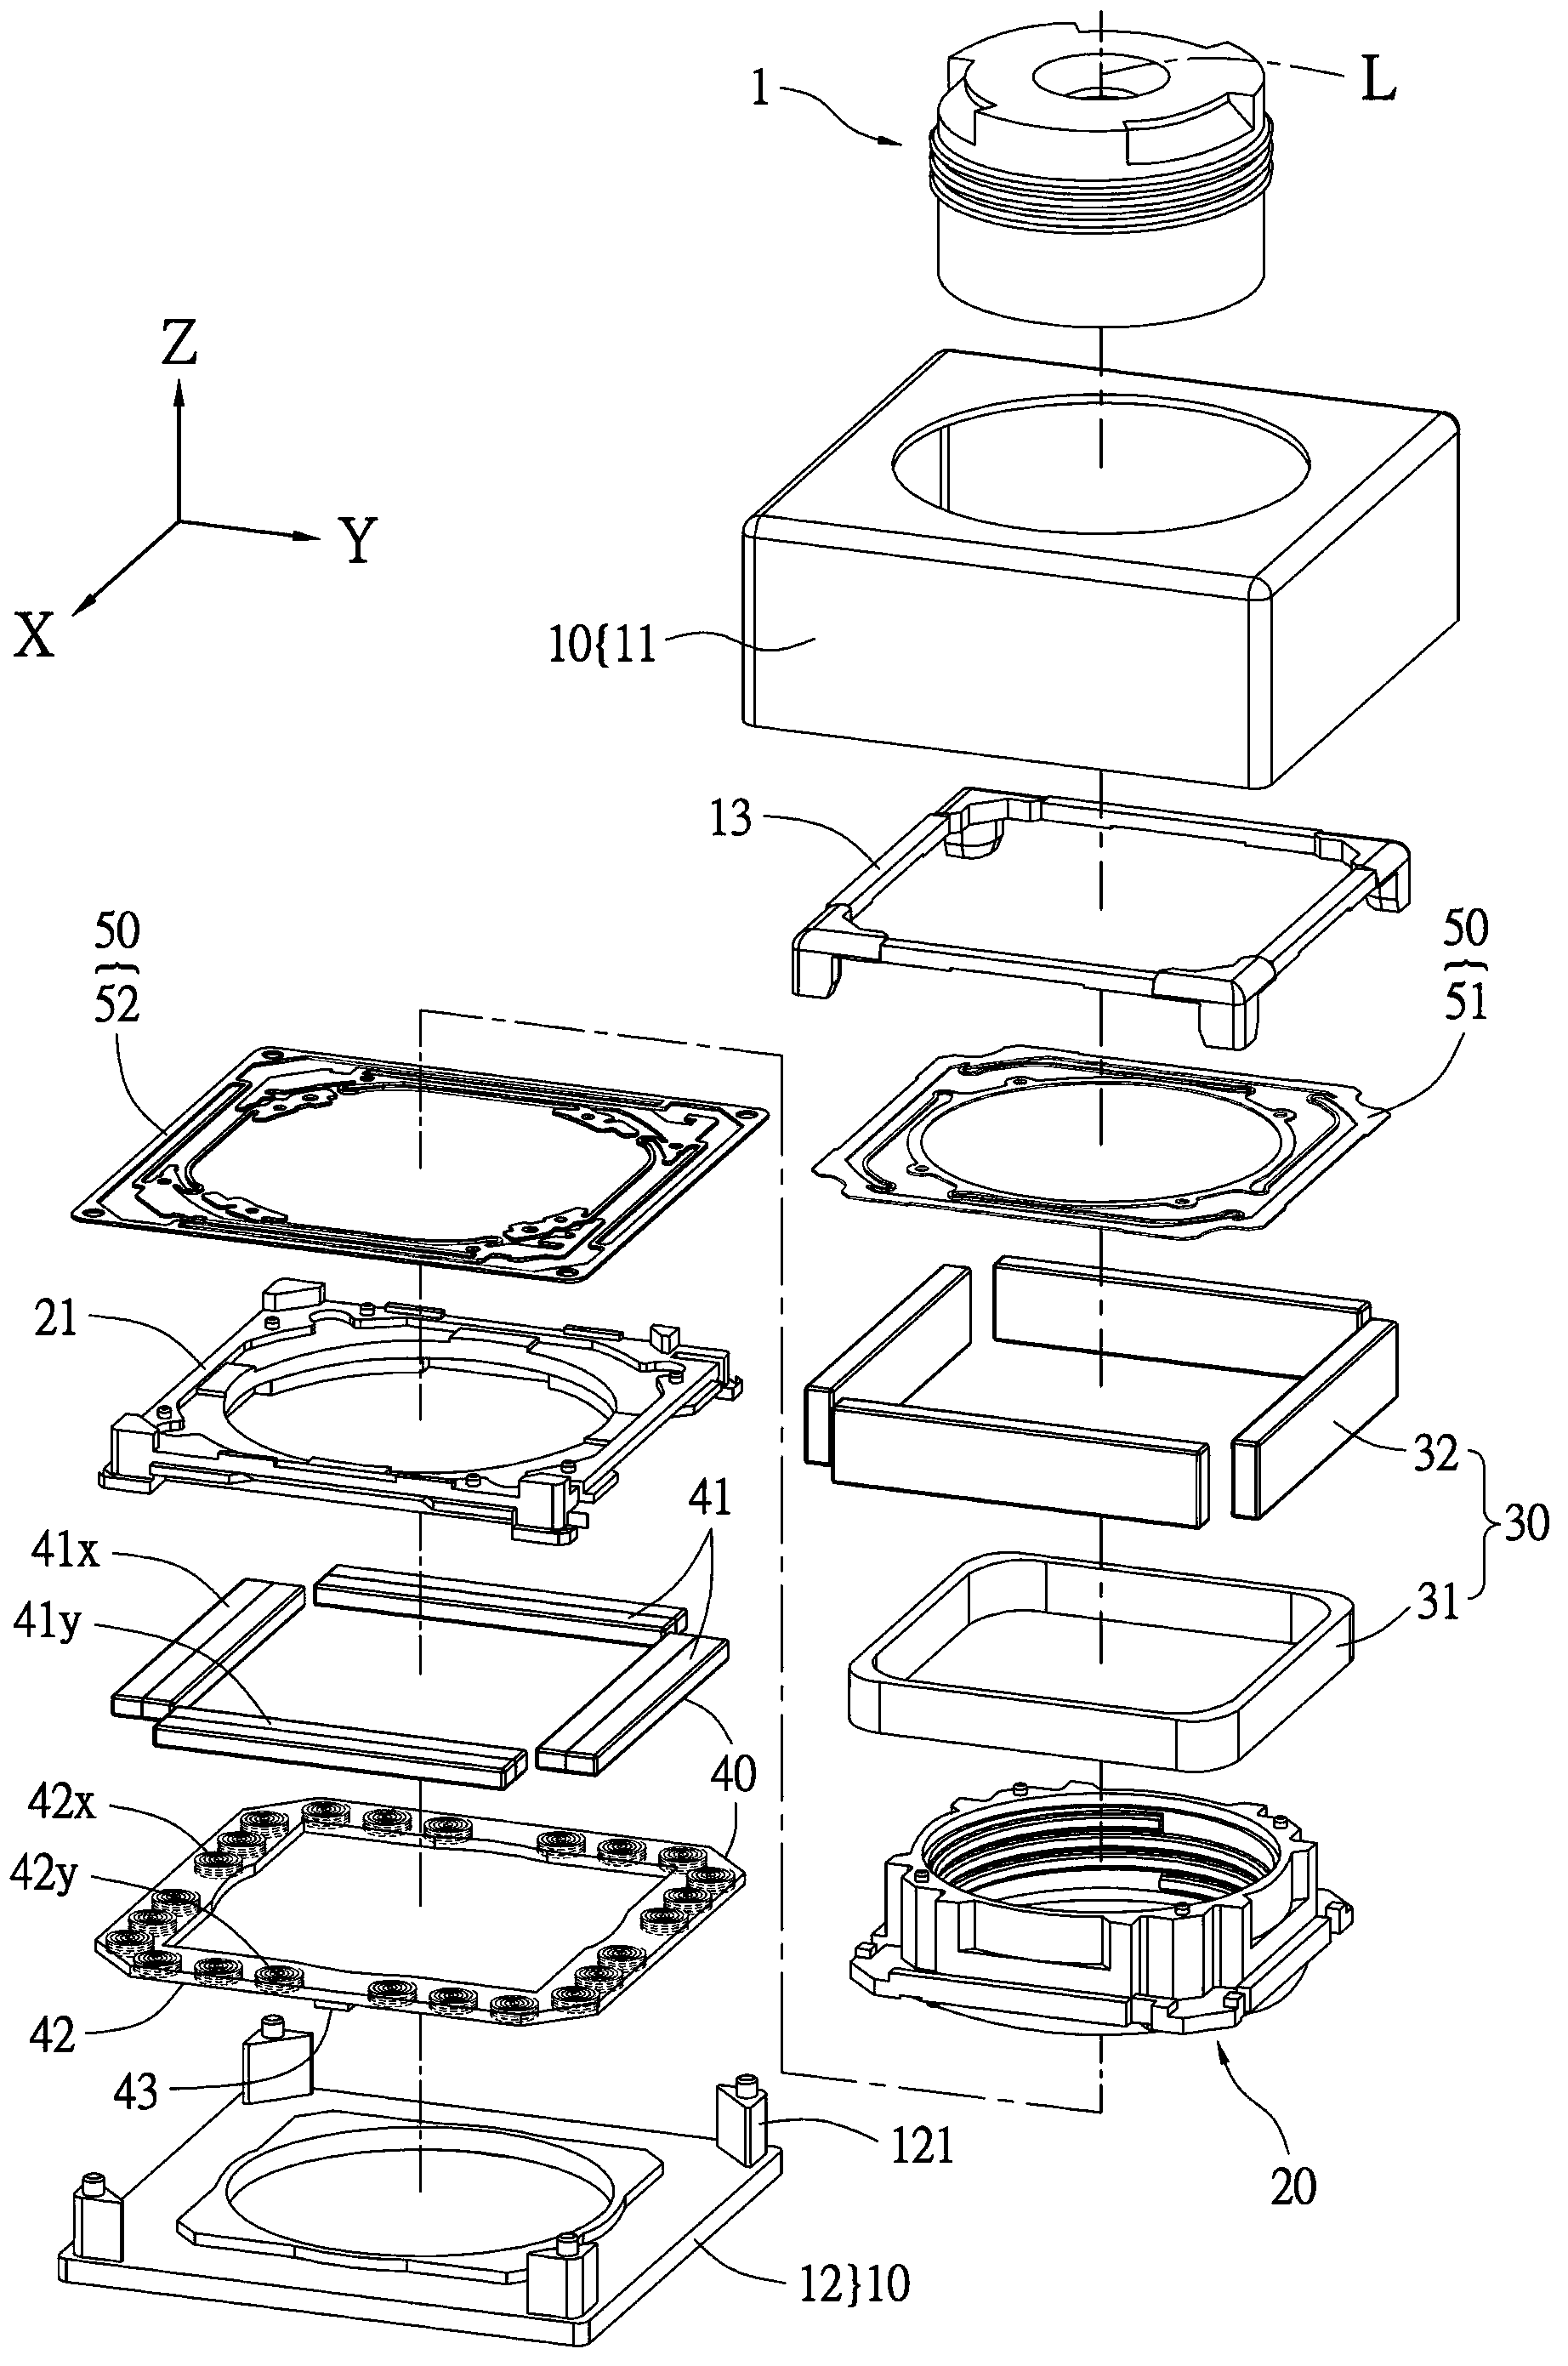 Auto-focusing actuator driving structure